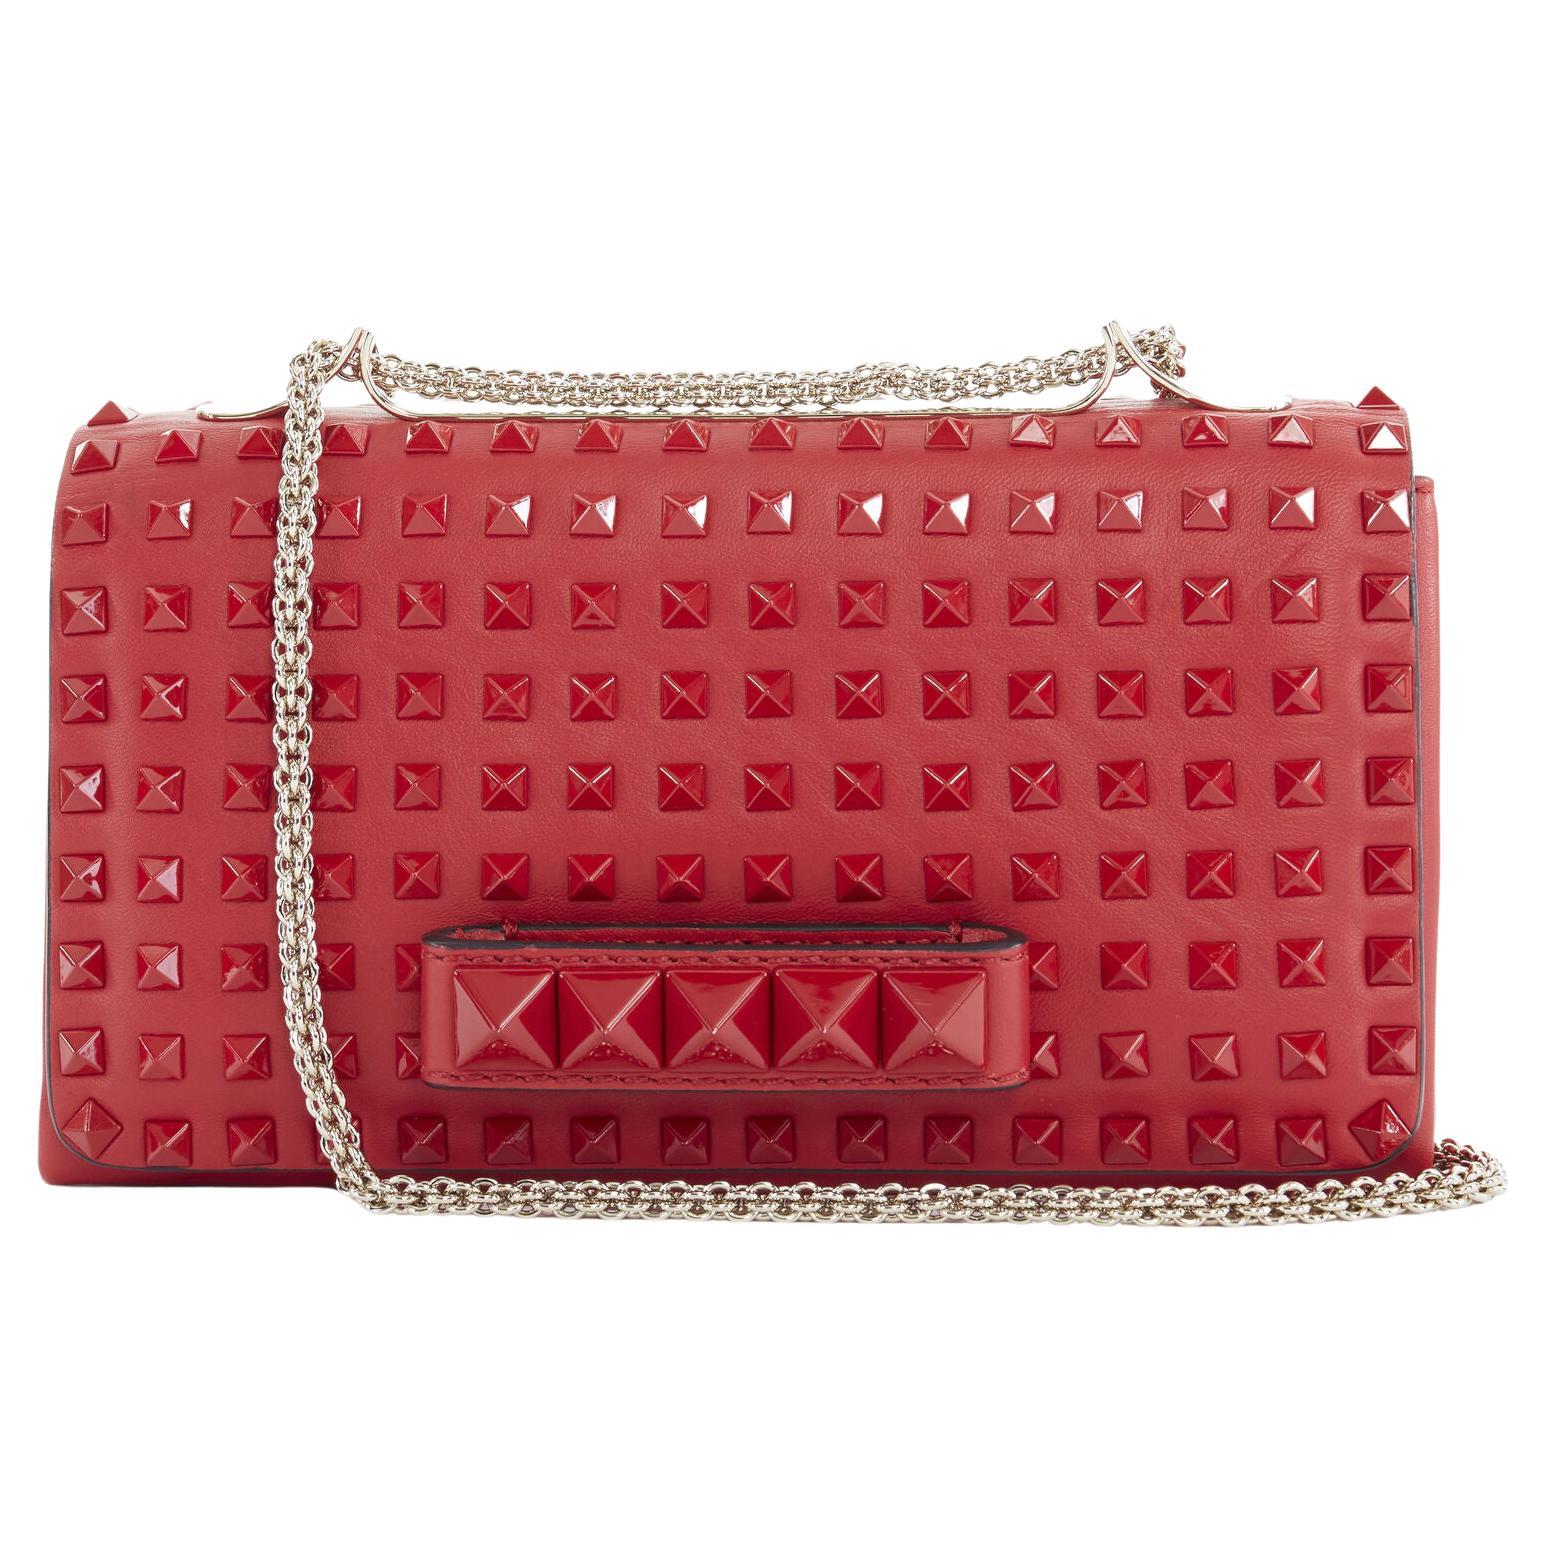 VALENTINO Rockstud Va Va Voom red leather tonal stud embellished flap clutch bag